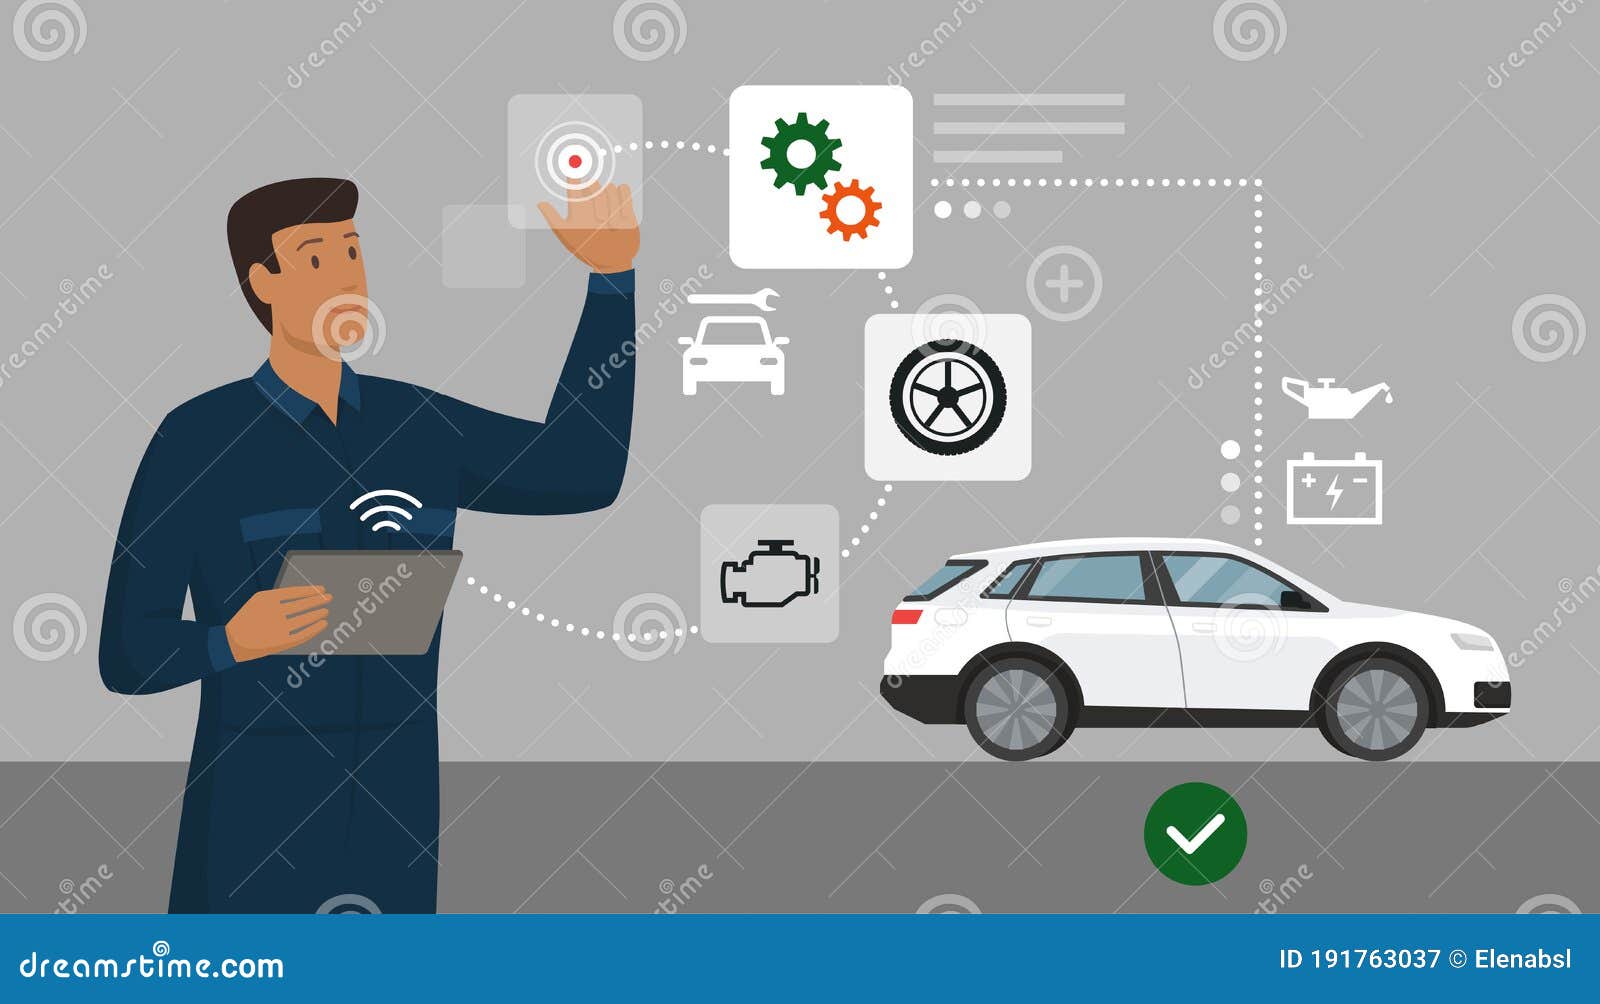 mechanic performing a car inspection using a digital app